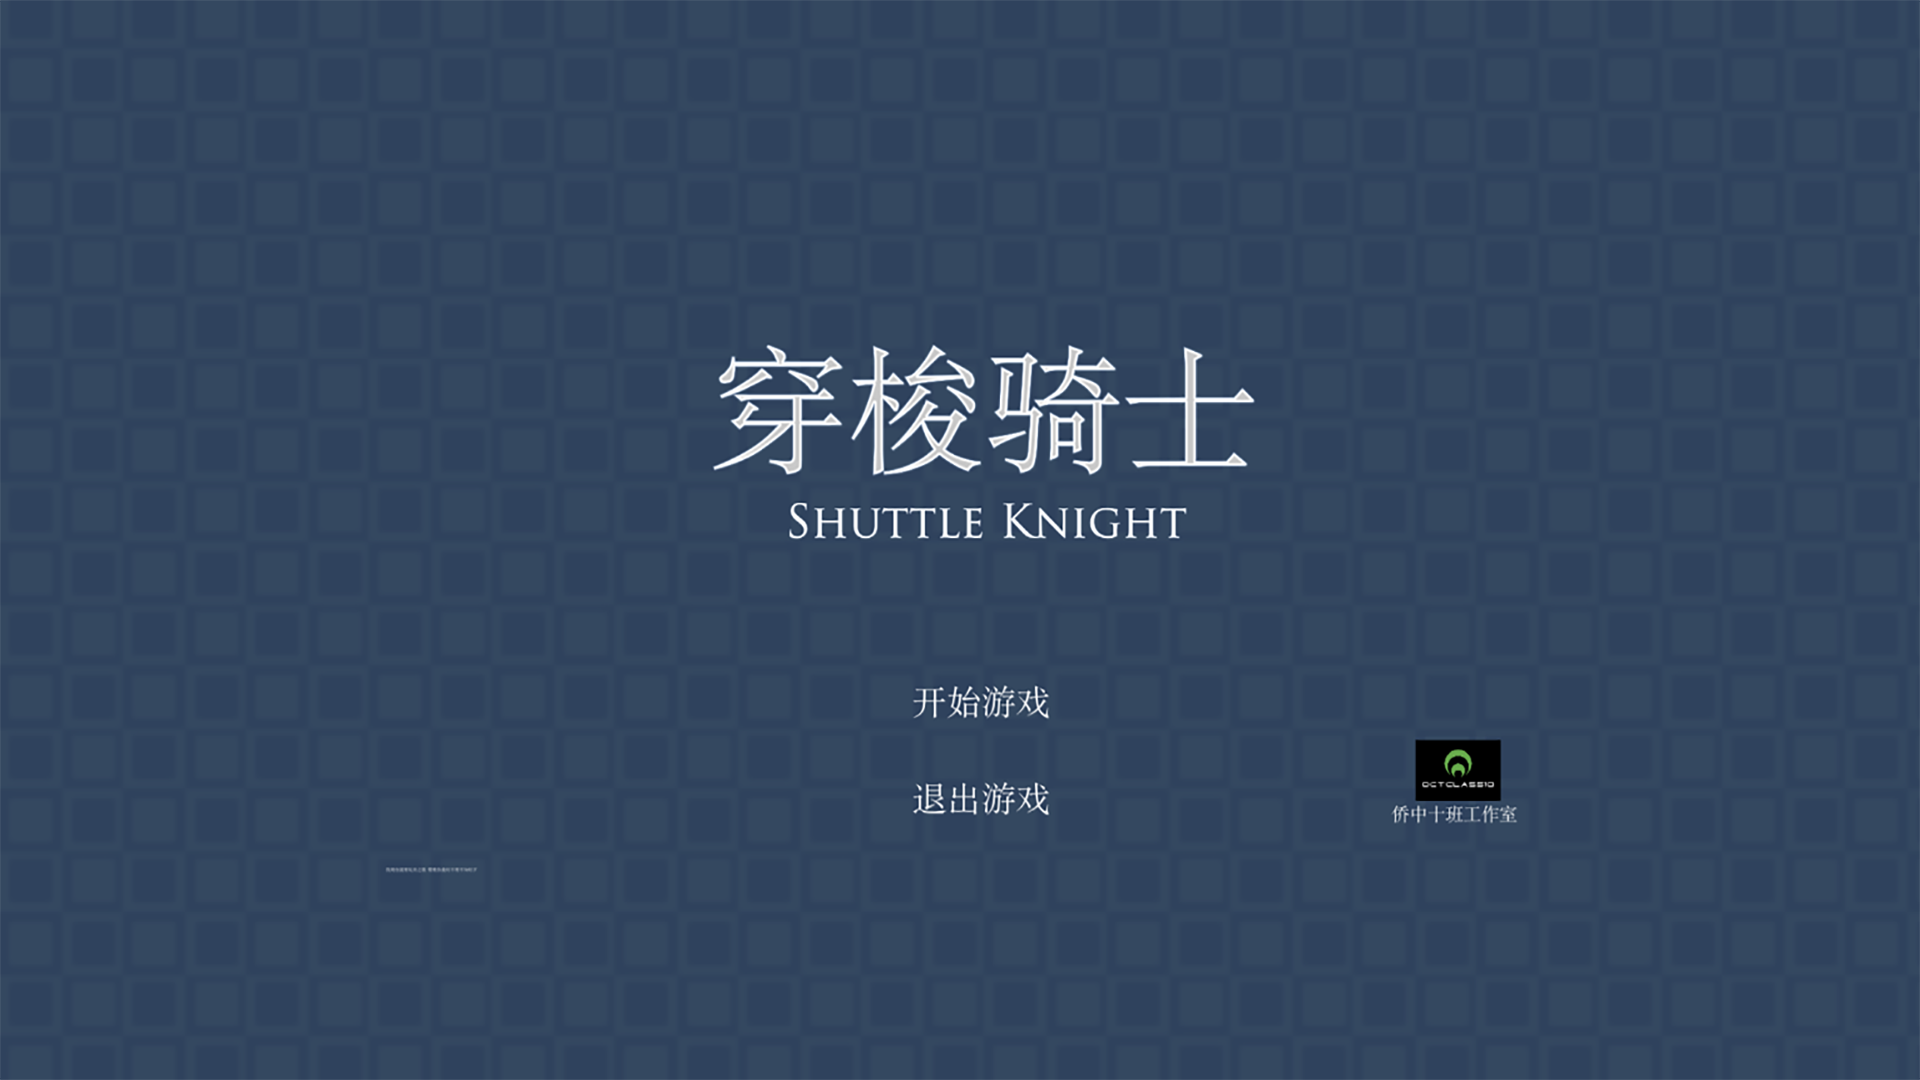 Banner of shuttle knight 